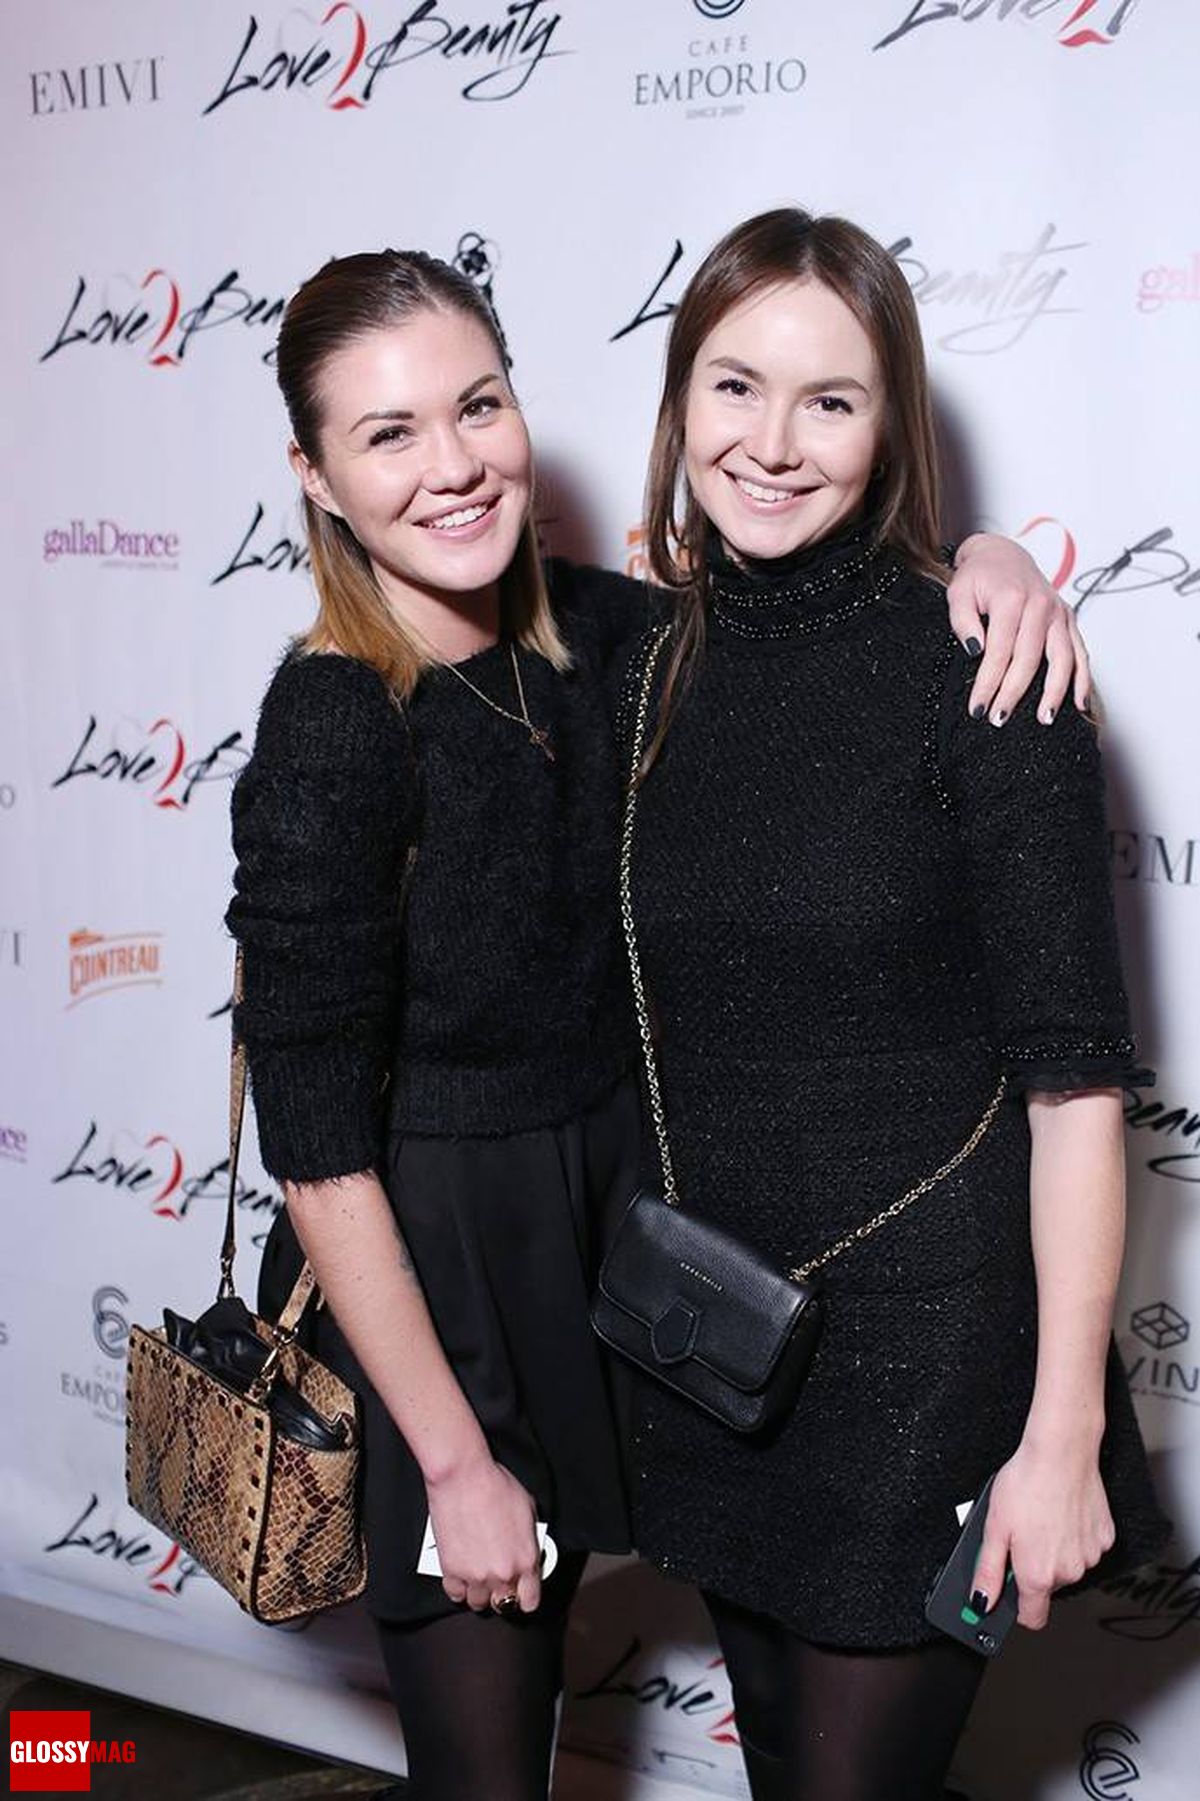 Александра Абрамова (Estée Lauder) и Дарья Фролова (Clinique) на праздновании 2-летия Love2Beauty.ru в EMPORIO CAFE, 20 ноября 2014 г.